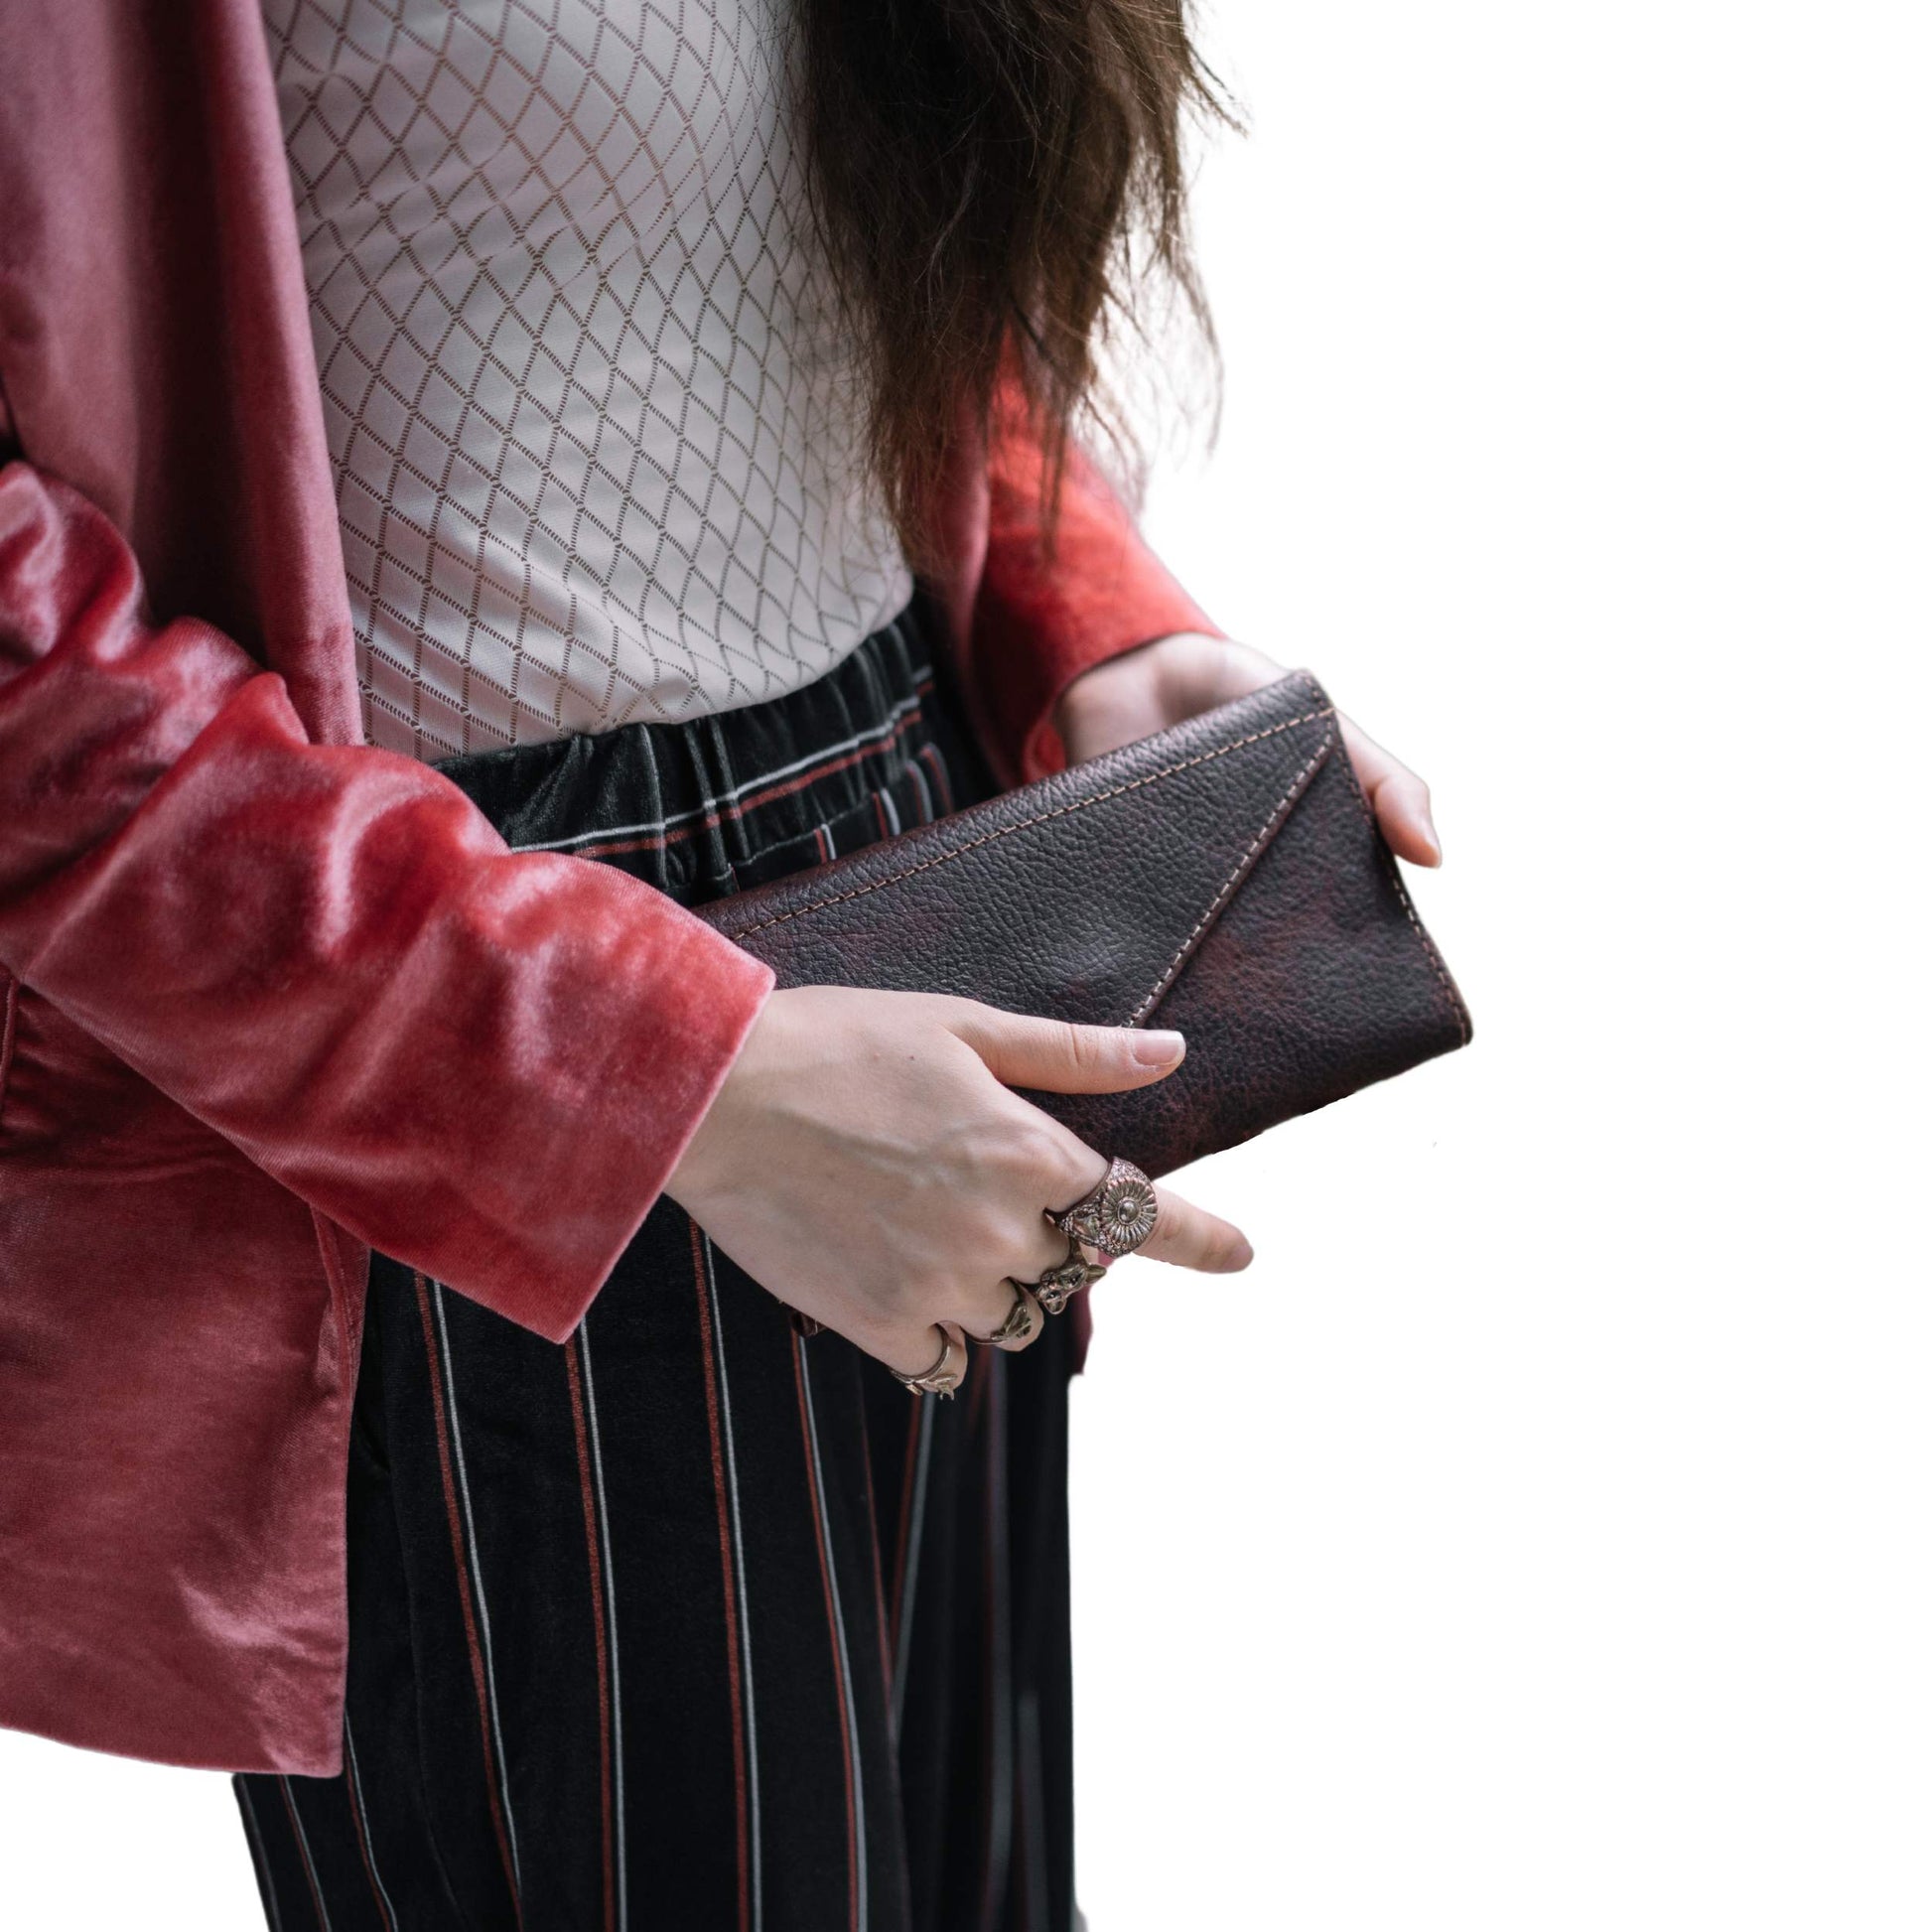 Women's Trifold Leather Wallet - Atitlan Leather